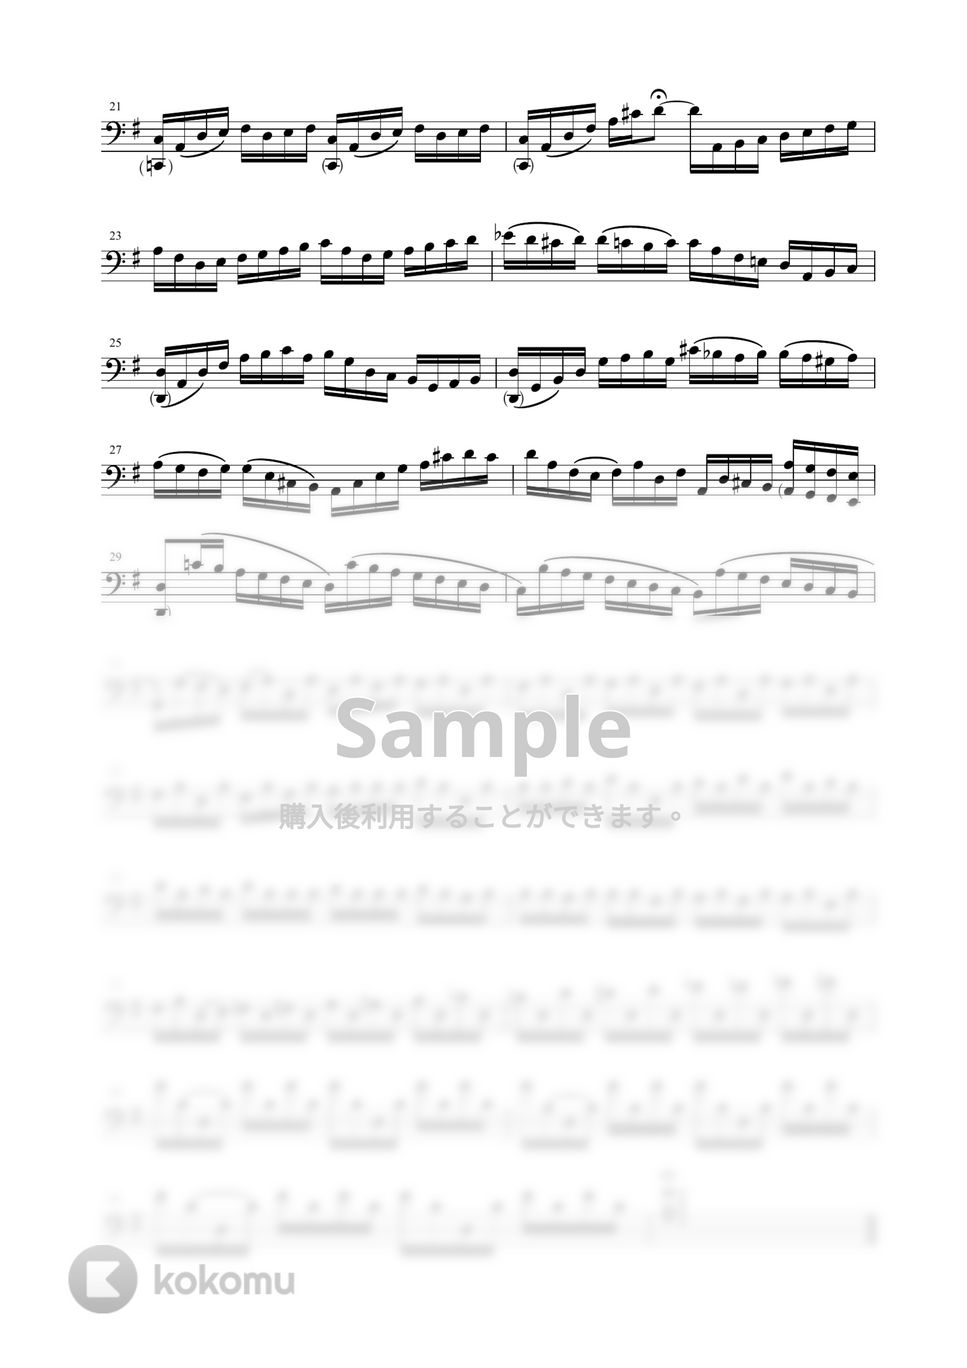 J.S.バッハ - チェロ組曲 より 第１番 プレリュード BWV1007 (ファゴット独奏 / バスーン独奏 / 無伴奏) by Zoe